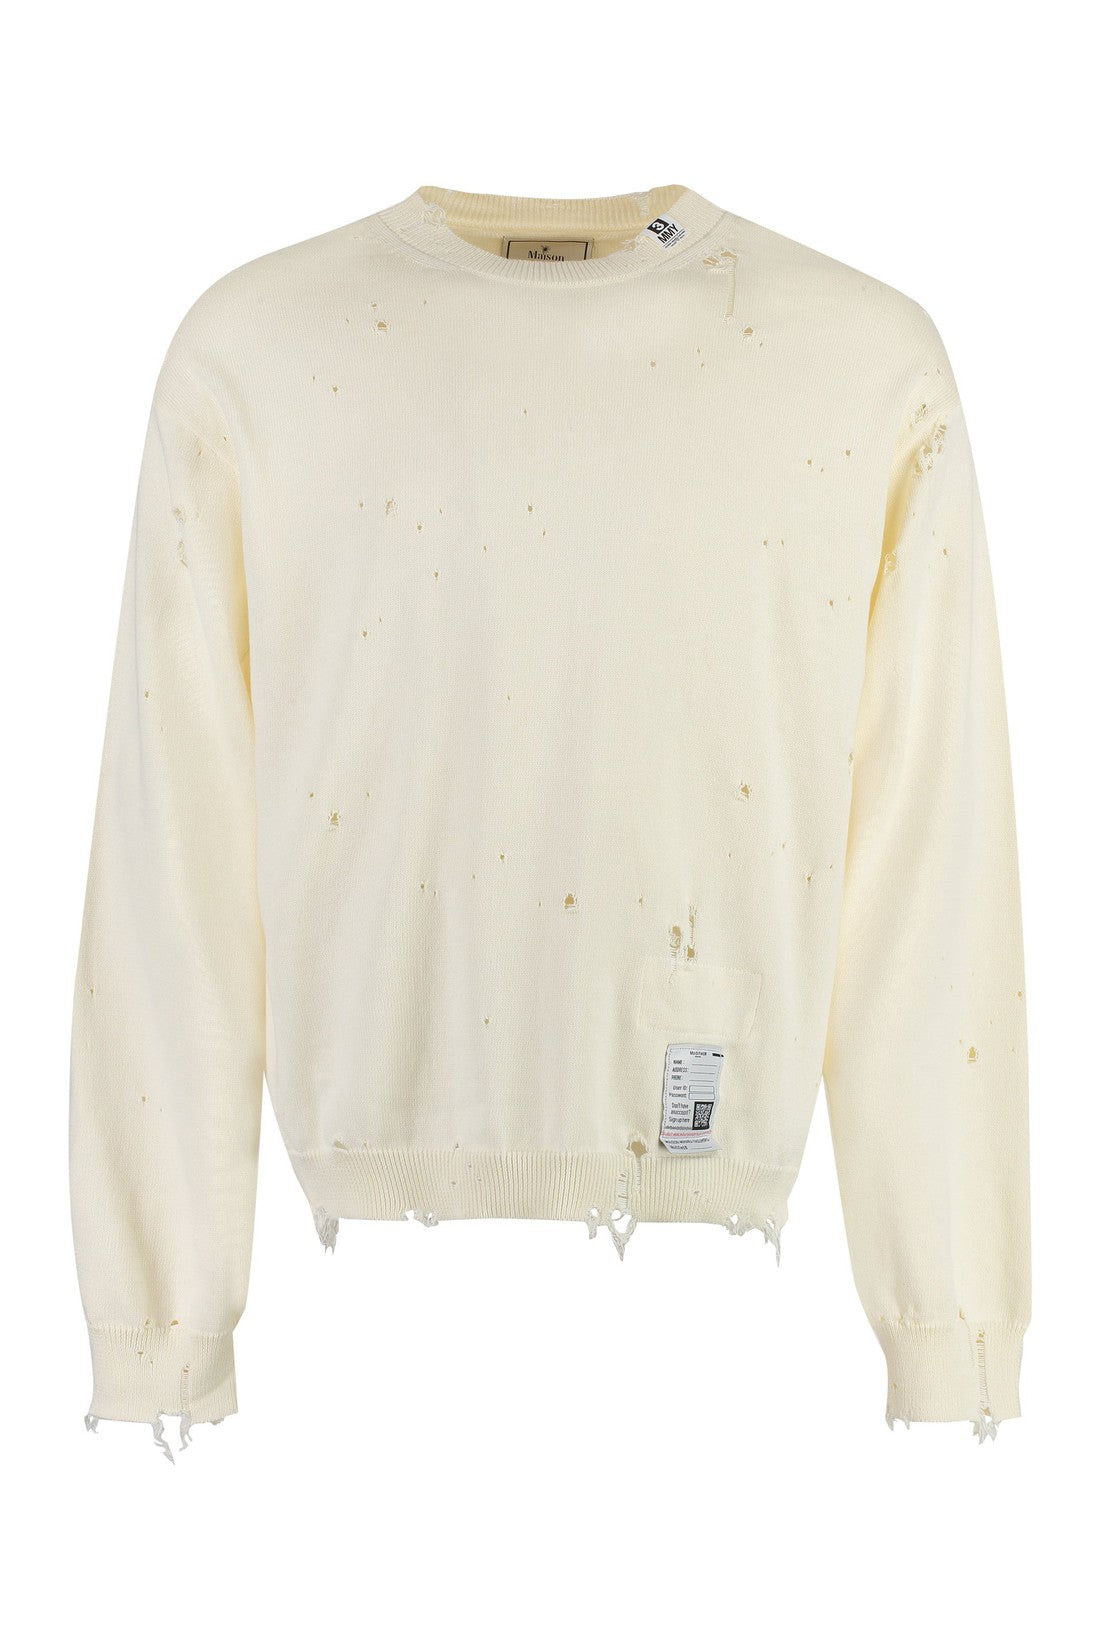 Maison Mihara Yasuhiro-OUTLET-SALE-Cotton crew-neck sweater-ARCHIVIST